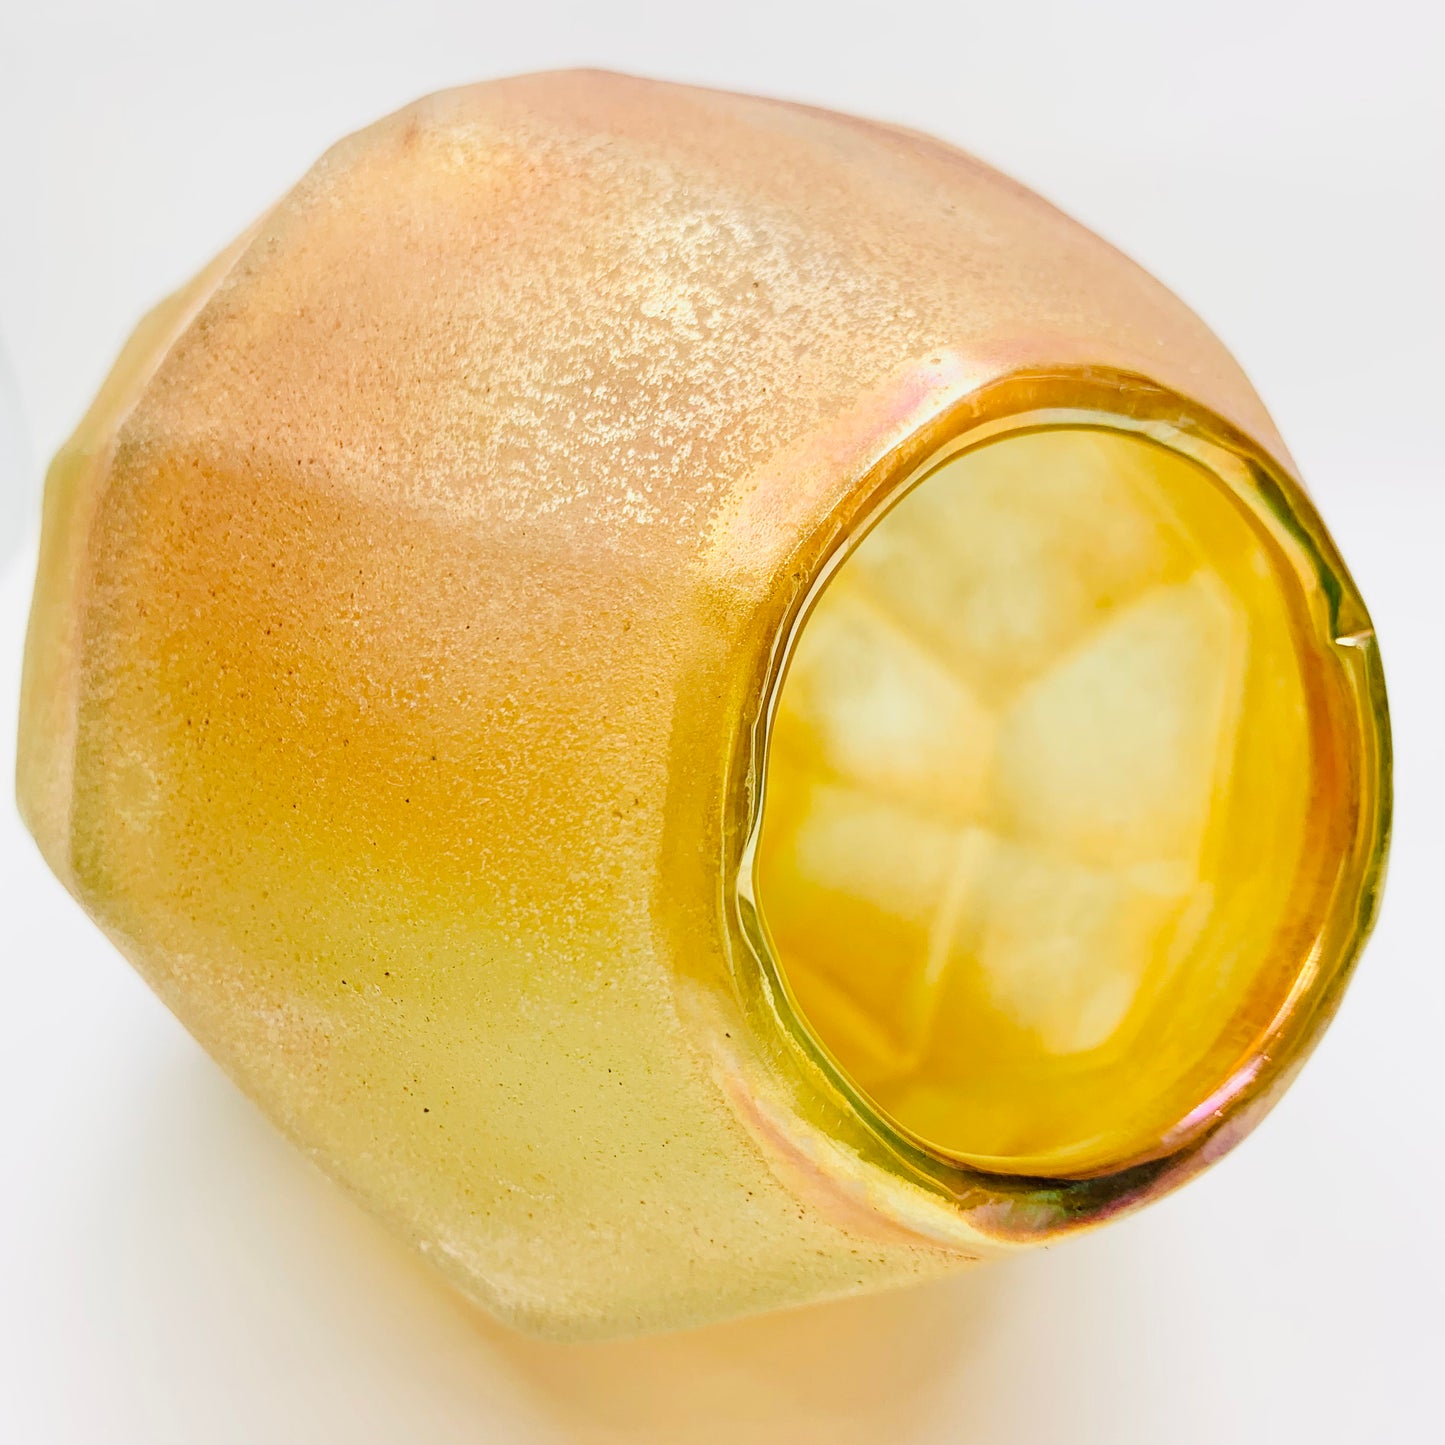 Vintage hand made iridescent amber glass acid washed coated vase